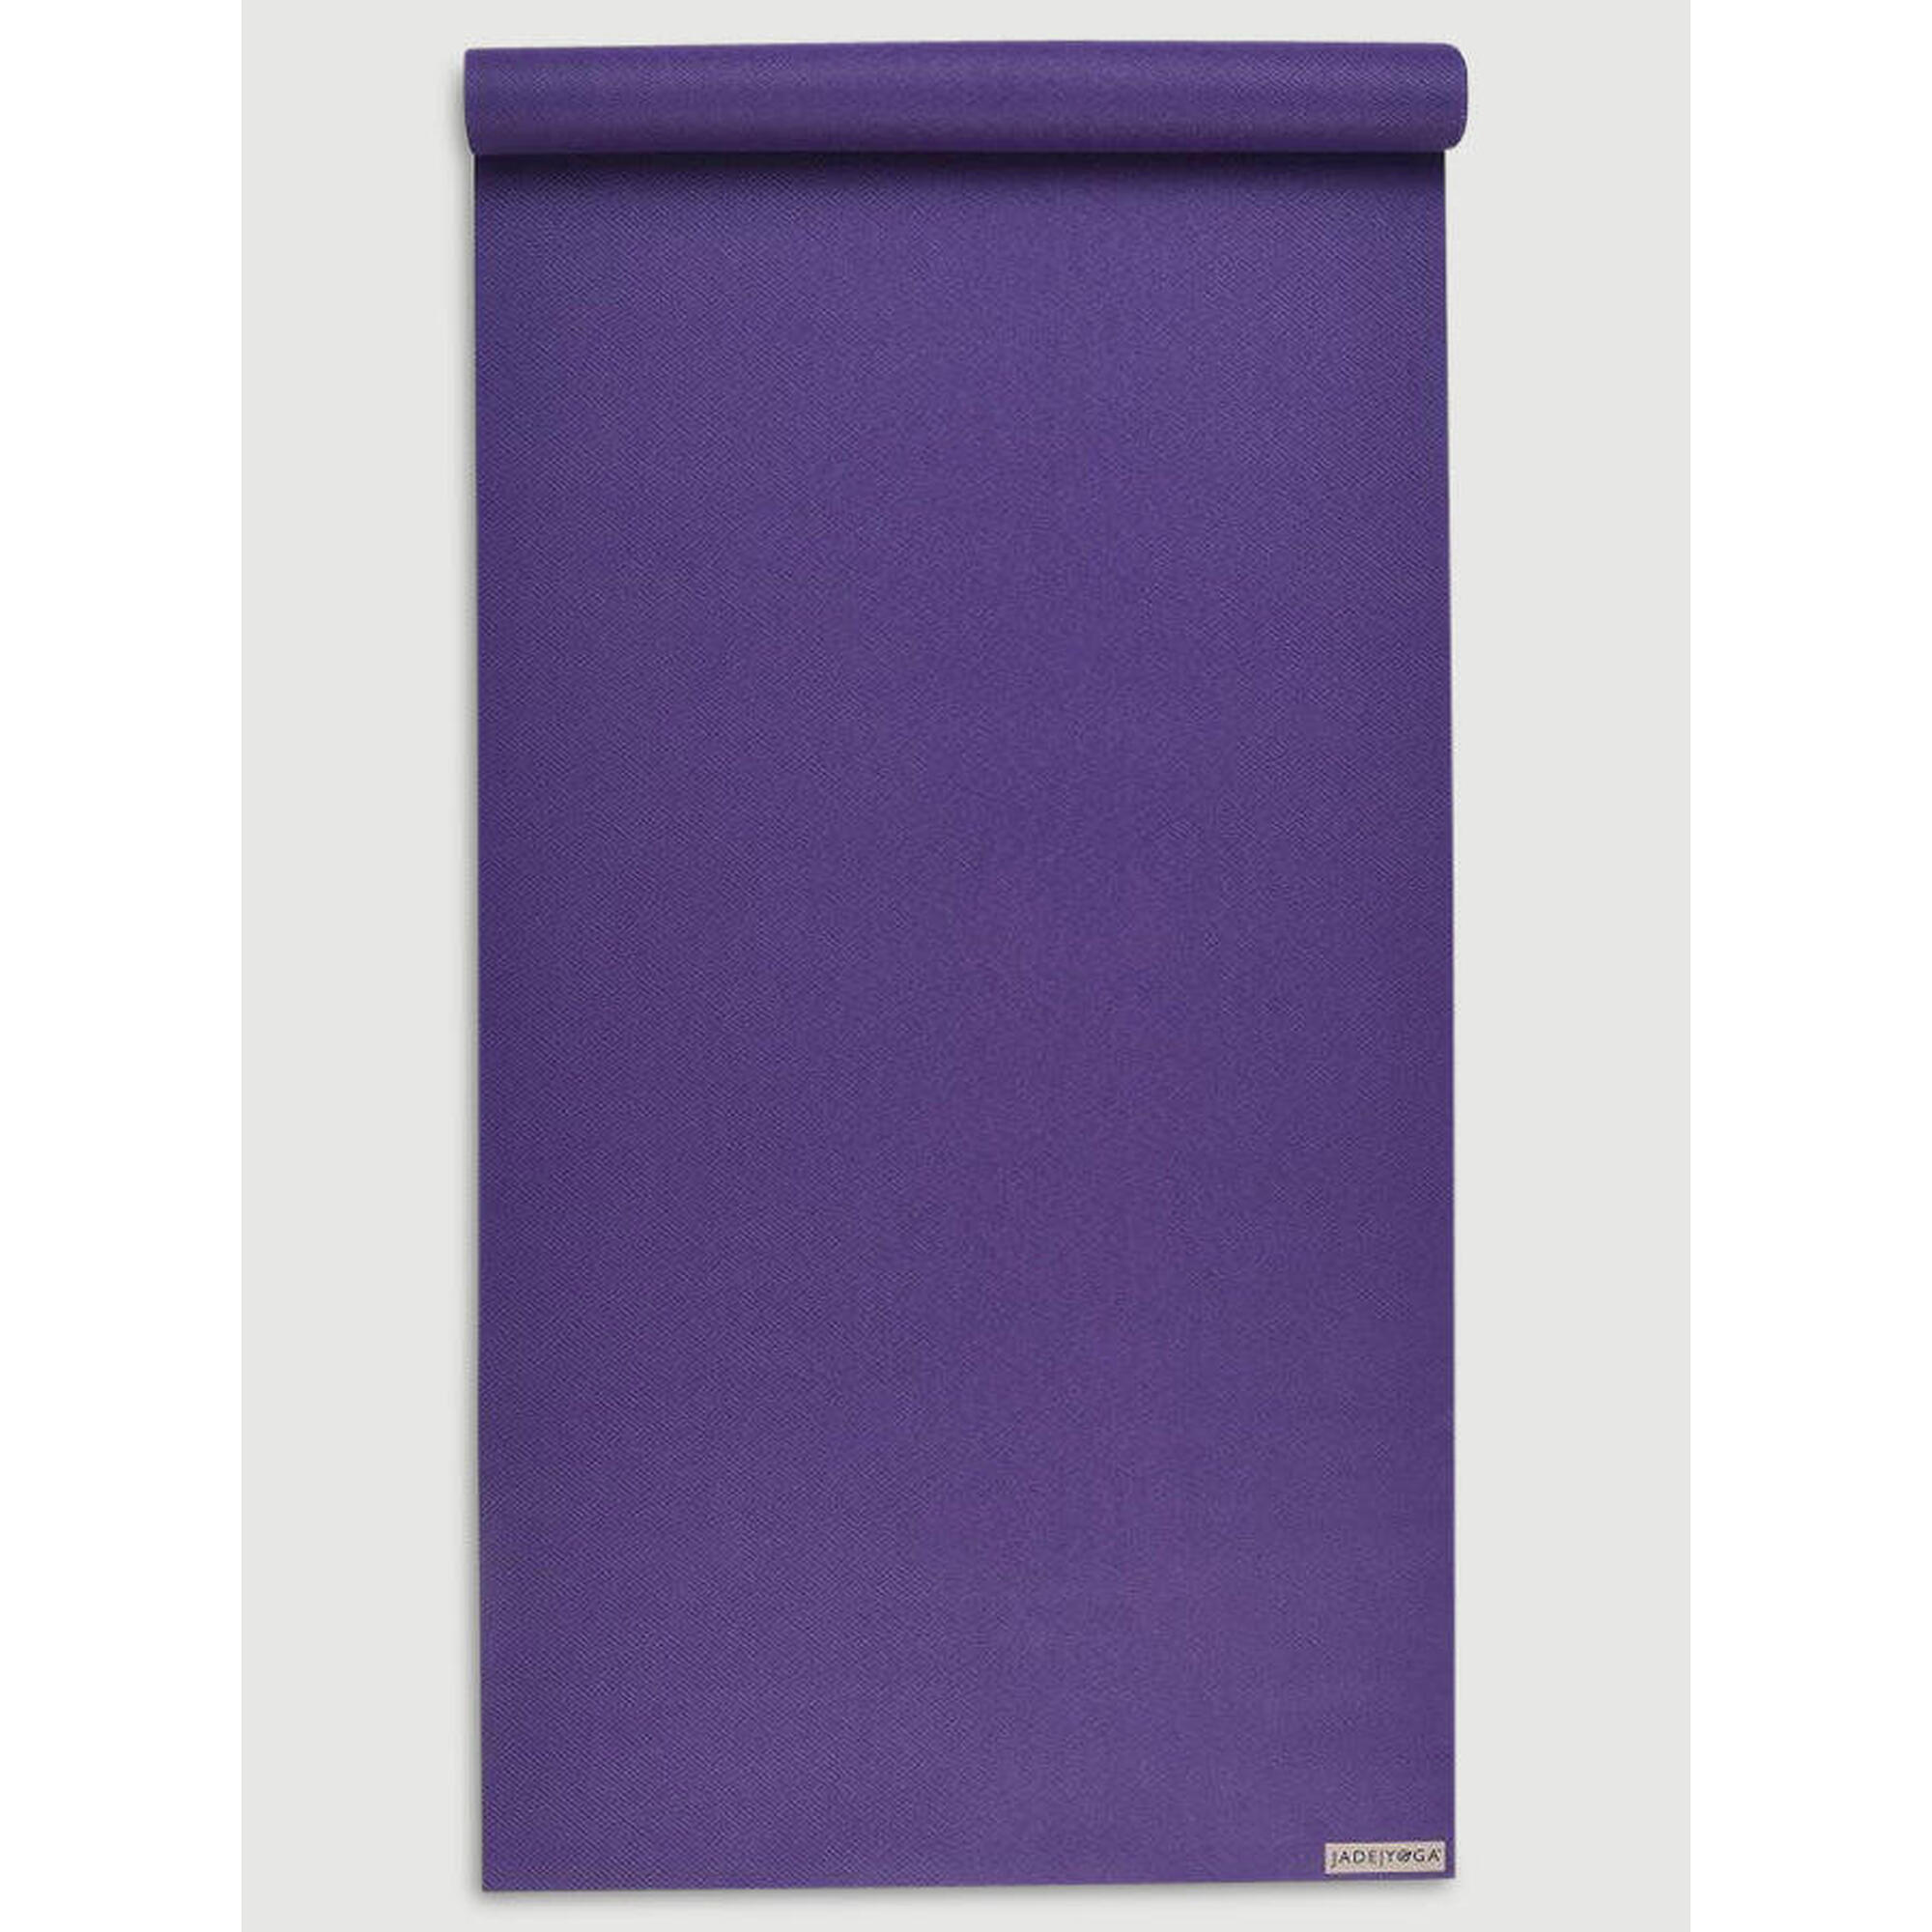 JADE YOGA Jade Yoga 74 Inch Travel Yoga Mat 3mm - Purple